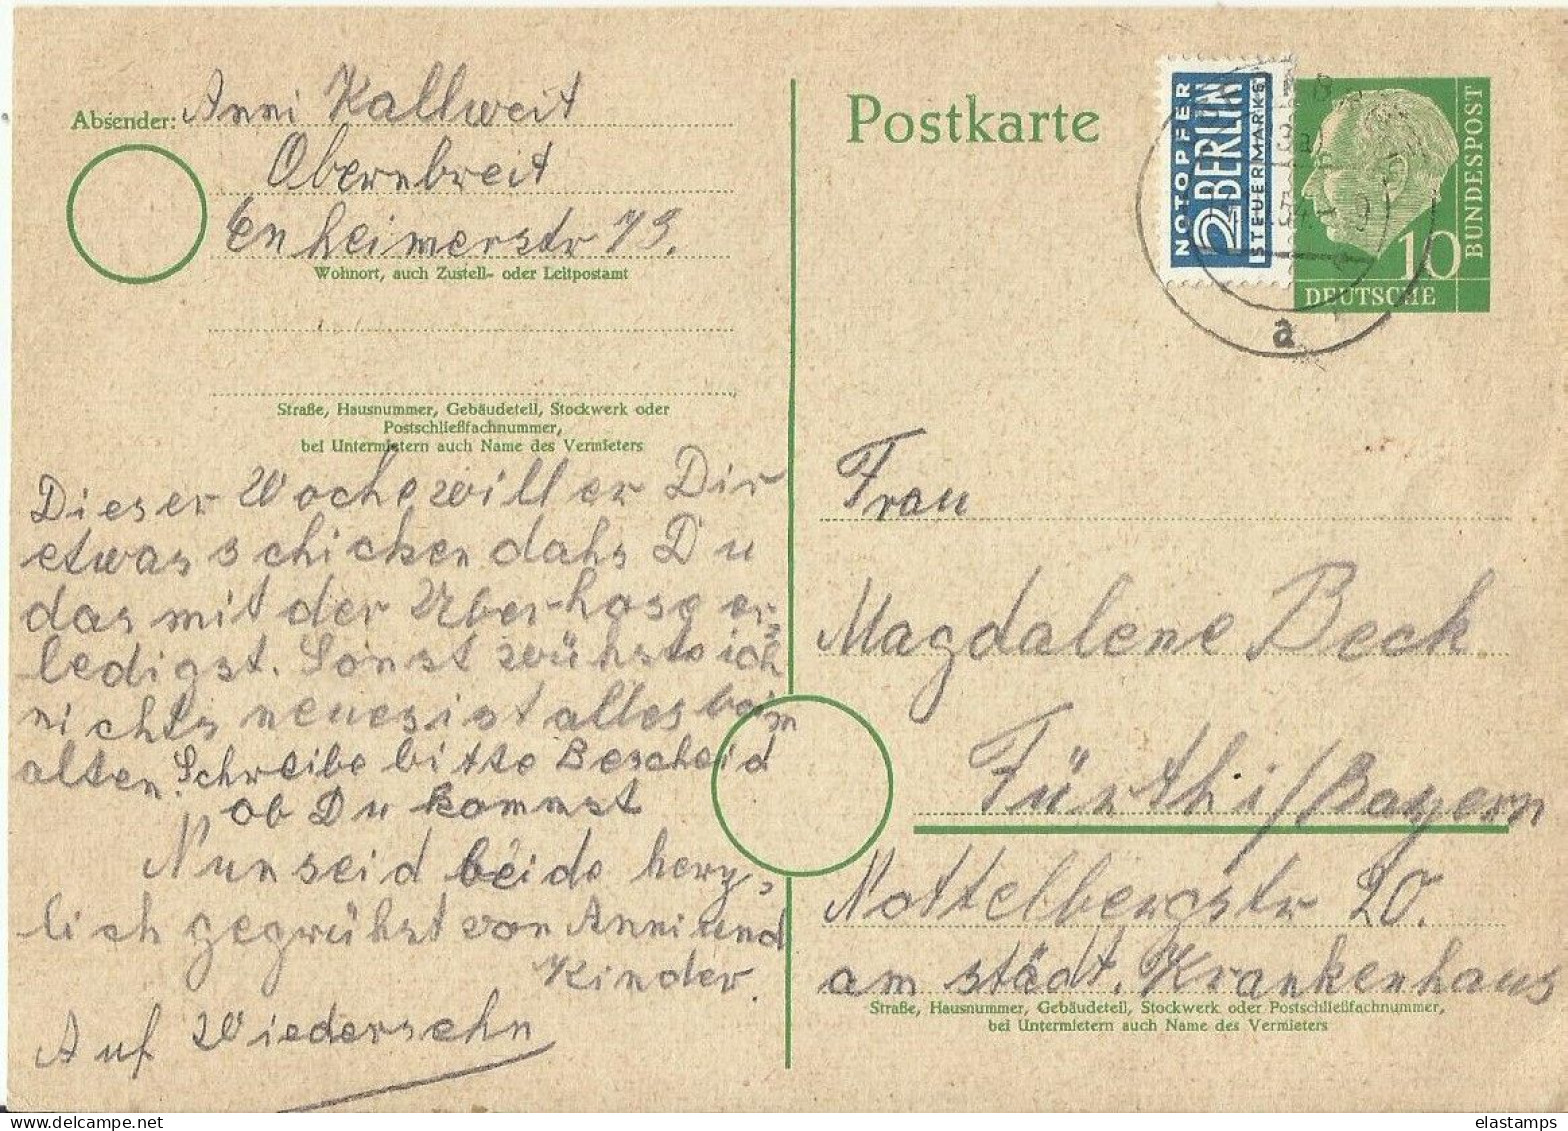 BDR 1954 GS - Postcards - Used